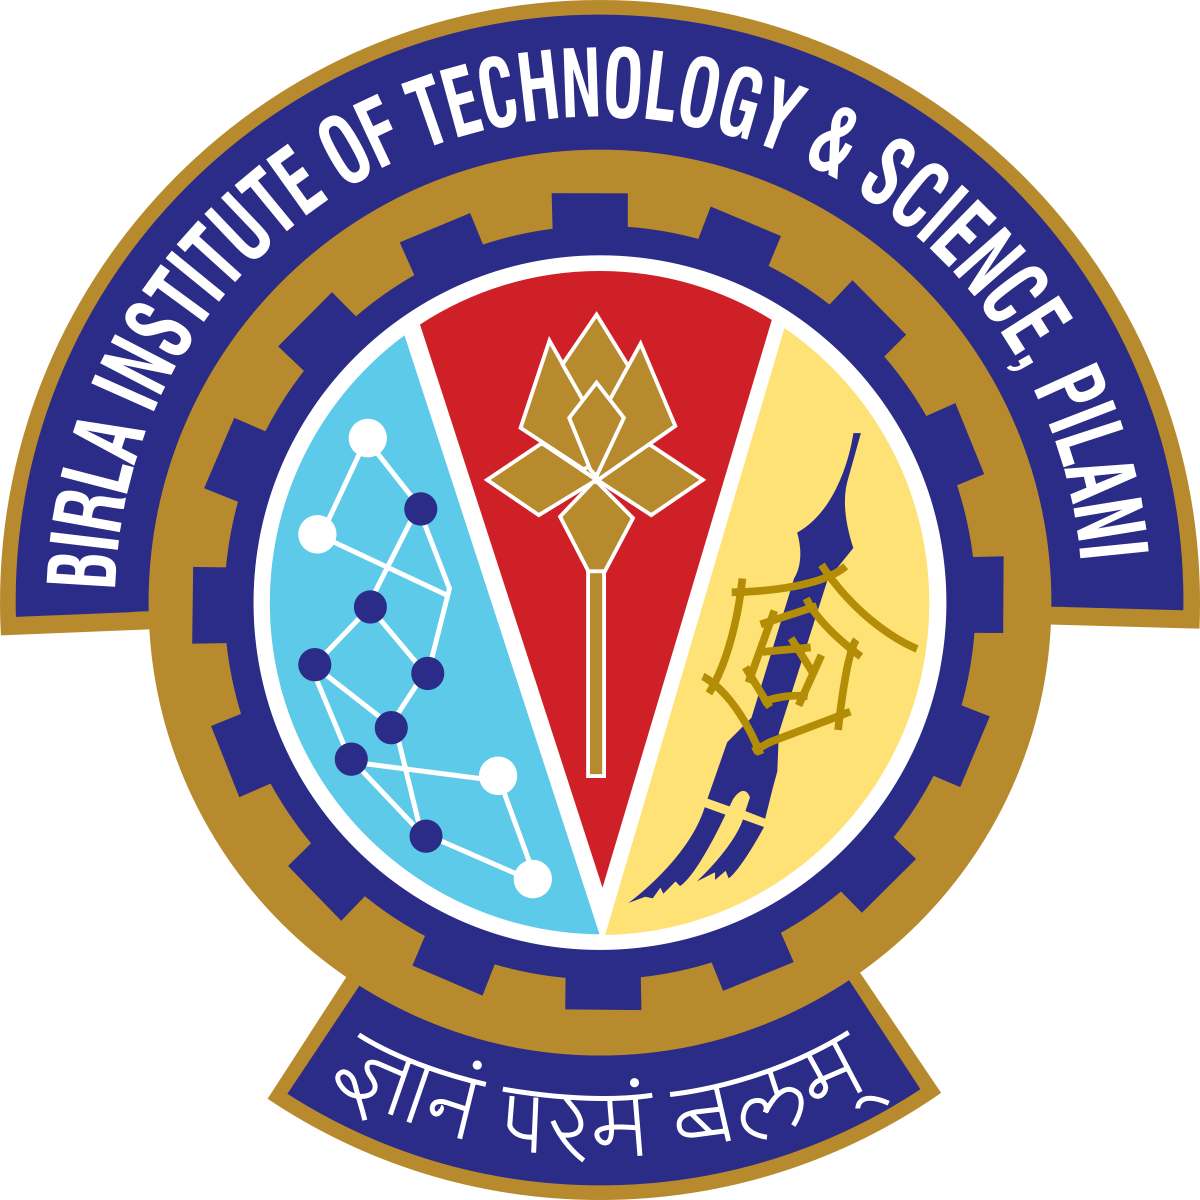 The logo of BITS, Sankalp Sangle's undergraduate college